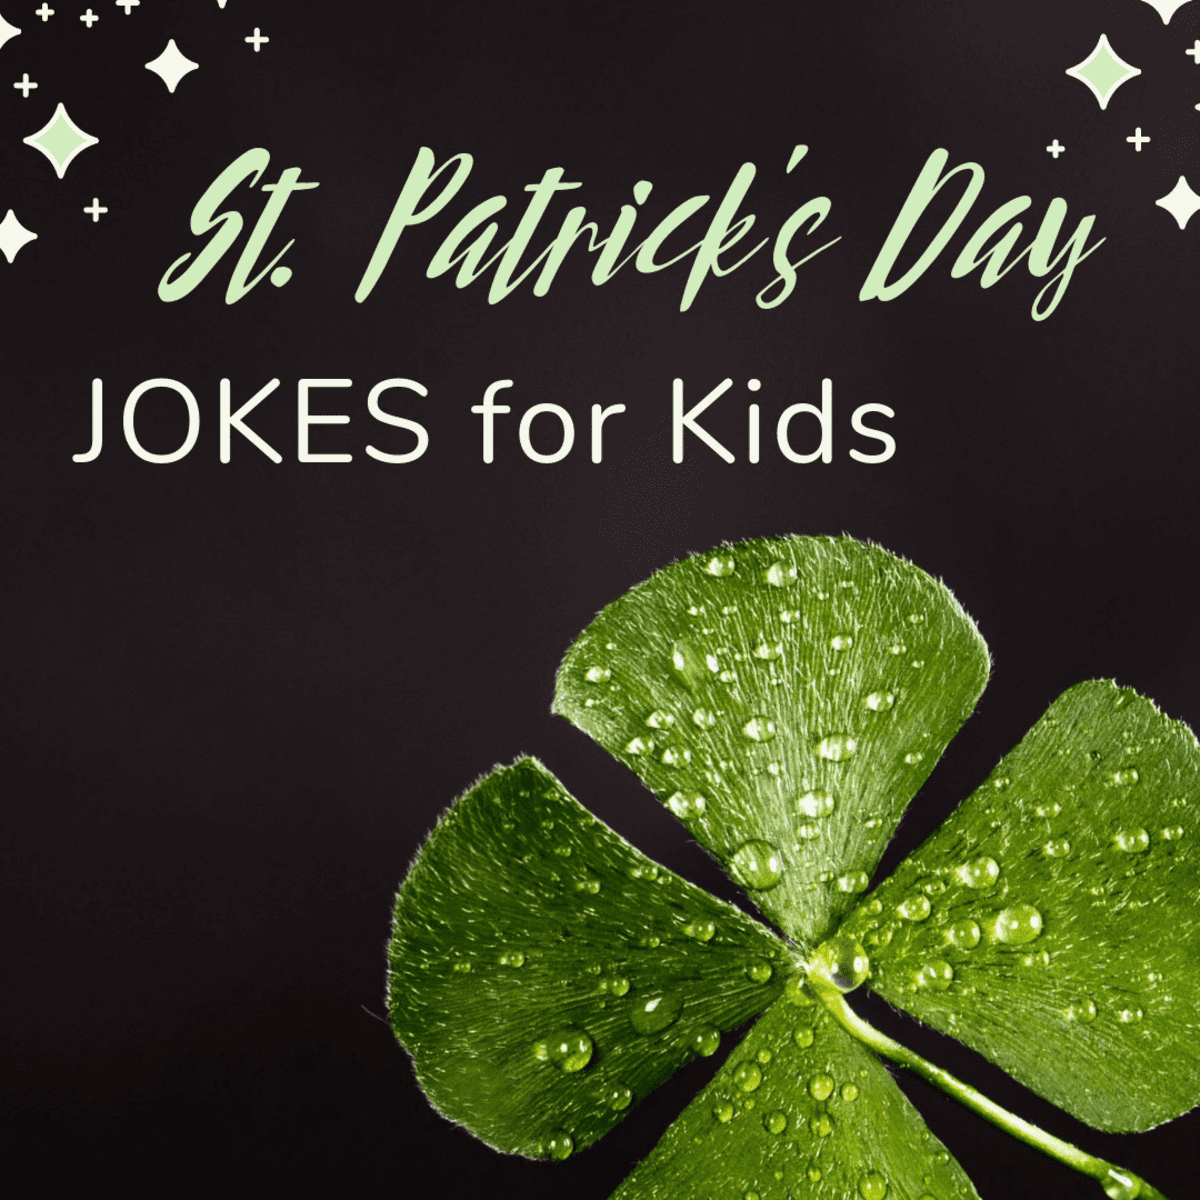 Jokes quick irish Irish jokes,